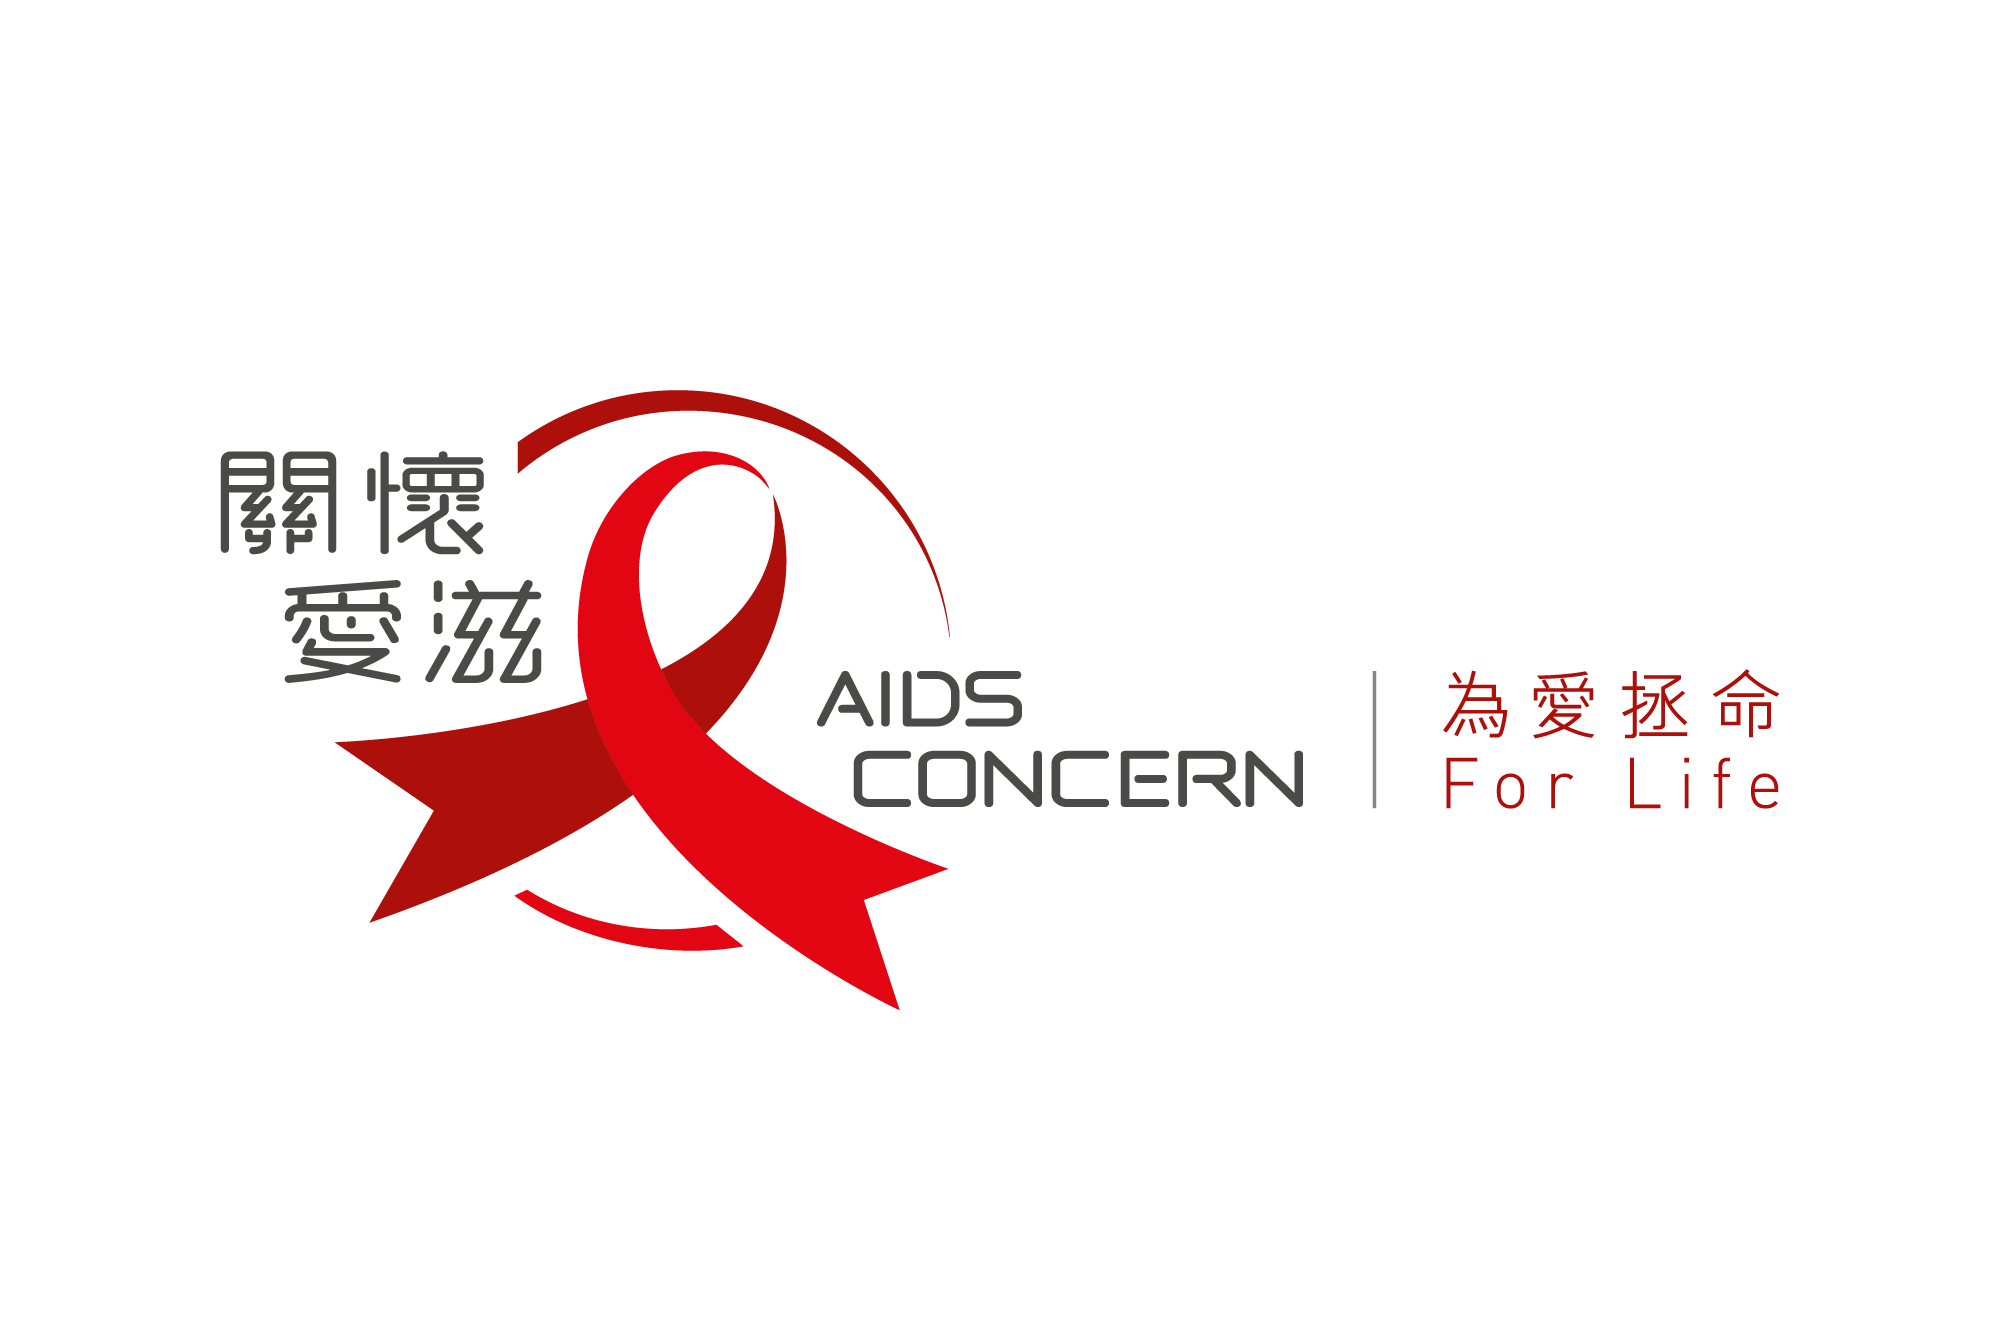 關懷愛滋基金有限公司 AIDS CONCERN FOUNDATION LIMITED